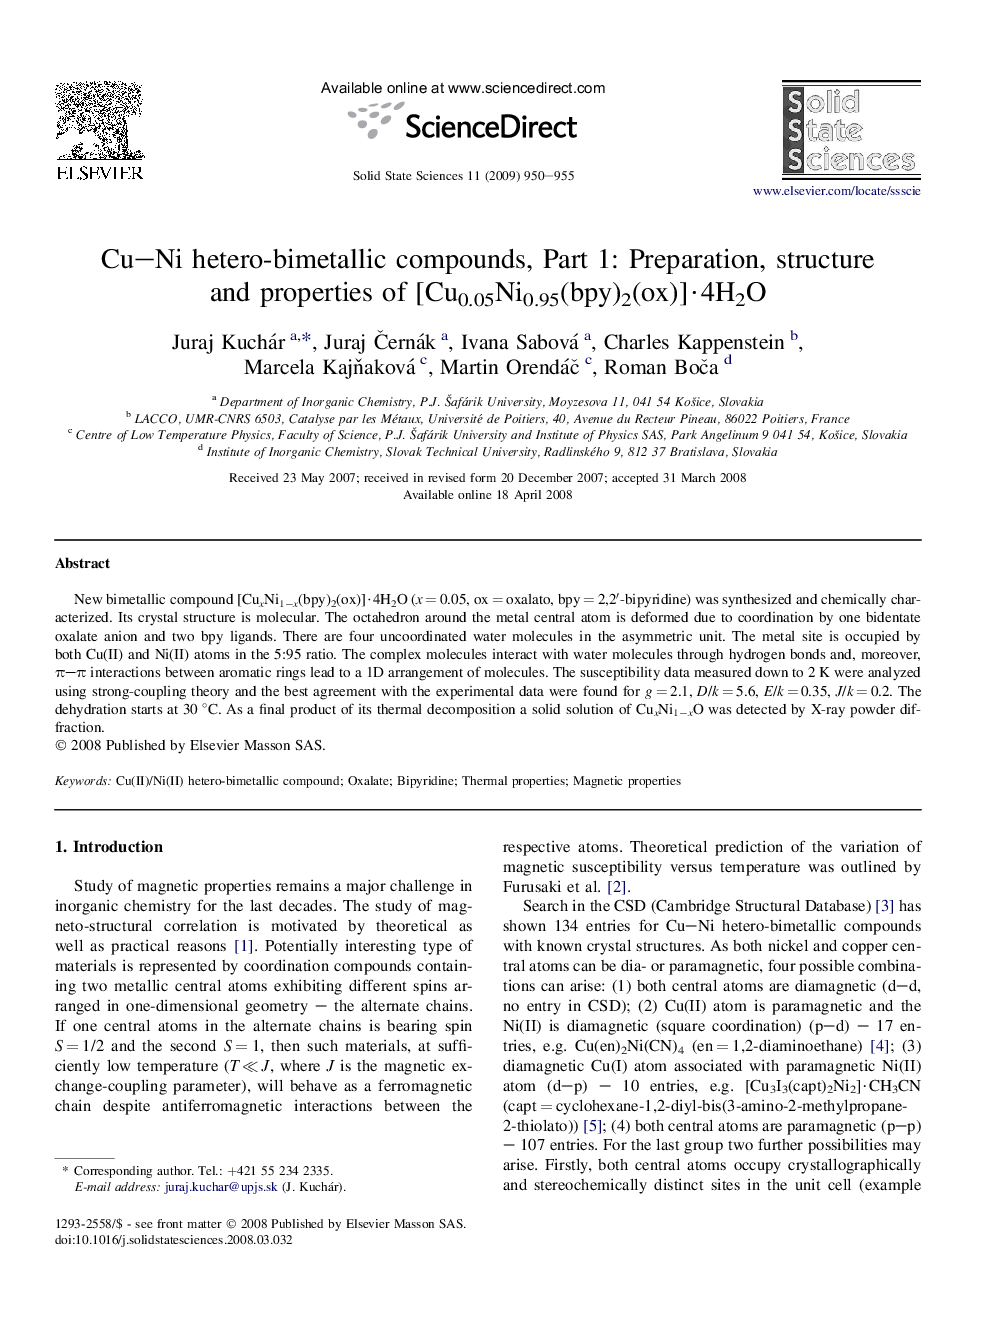 Cu–Ni hetero-bimetallic compounds, Part 1: Preparation, structure and properties of [Cu0.05Ni0.95(bpy)2(ox)]·4H2O